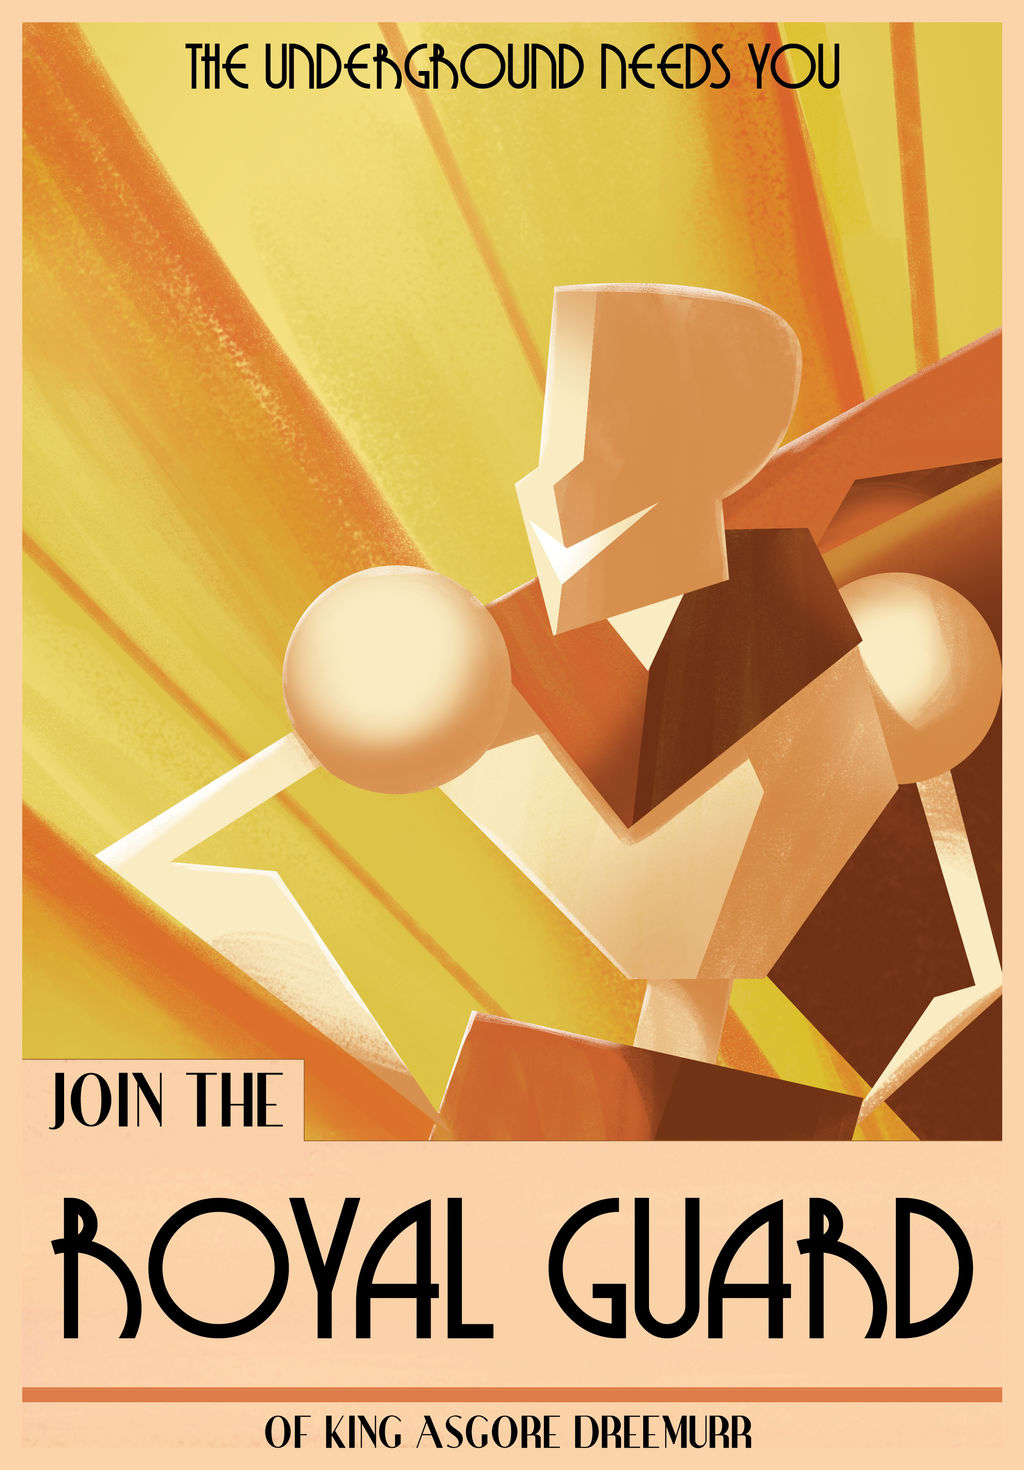 Join the ROYAL GUARD